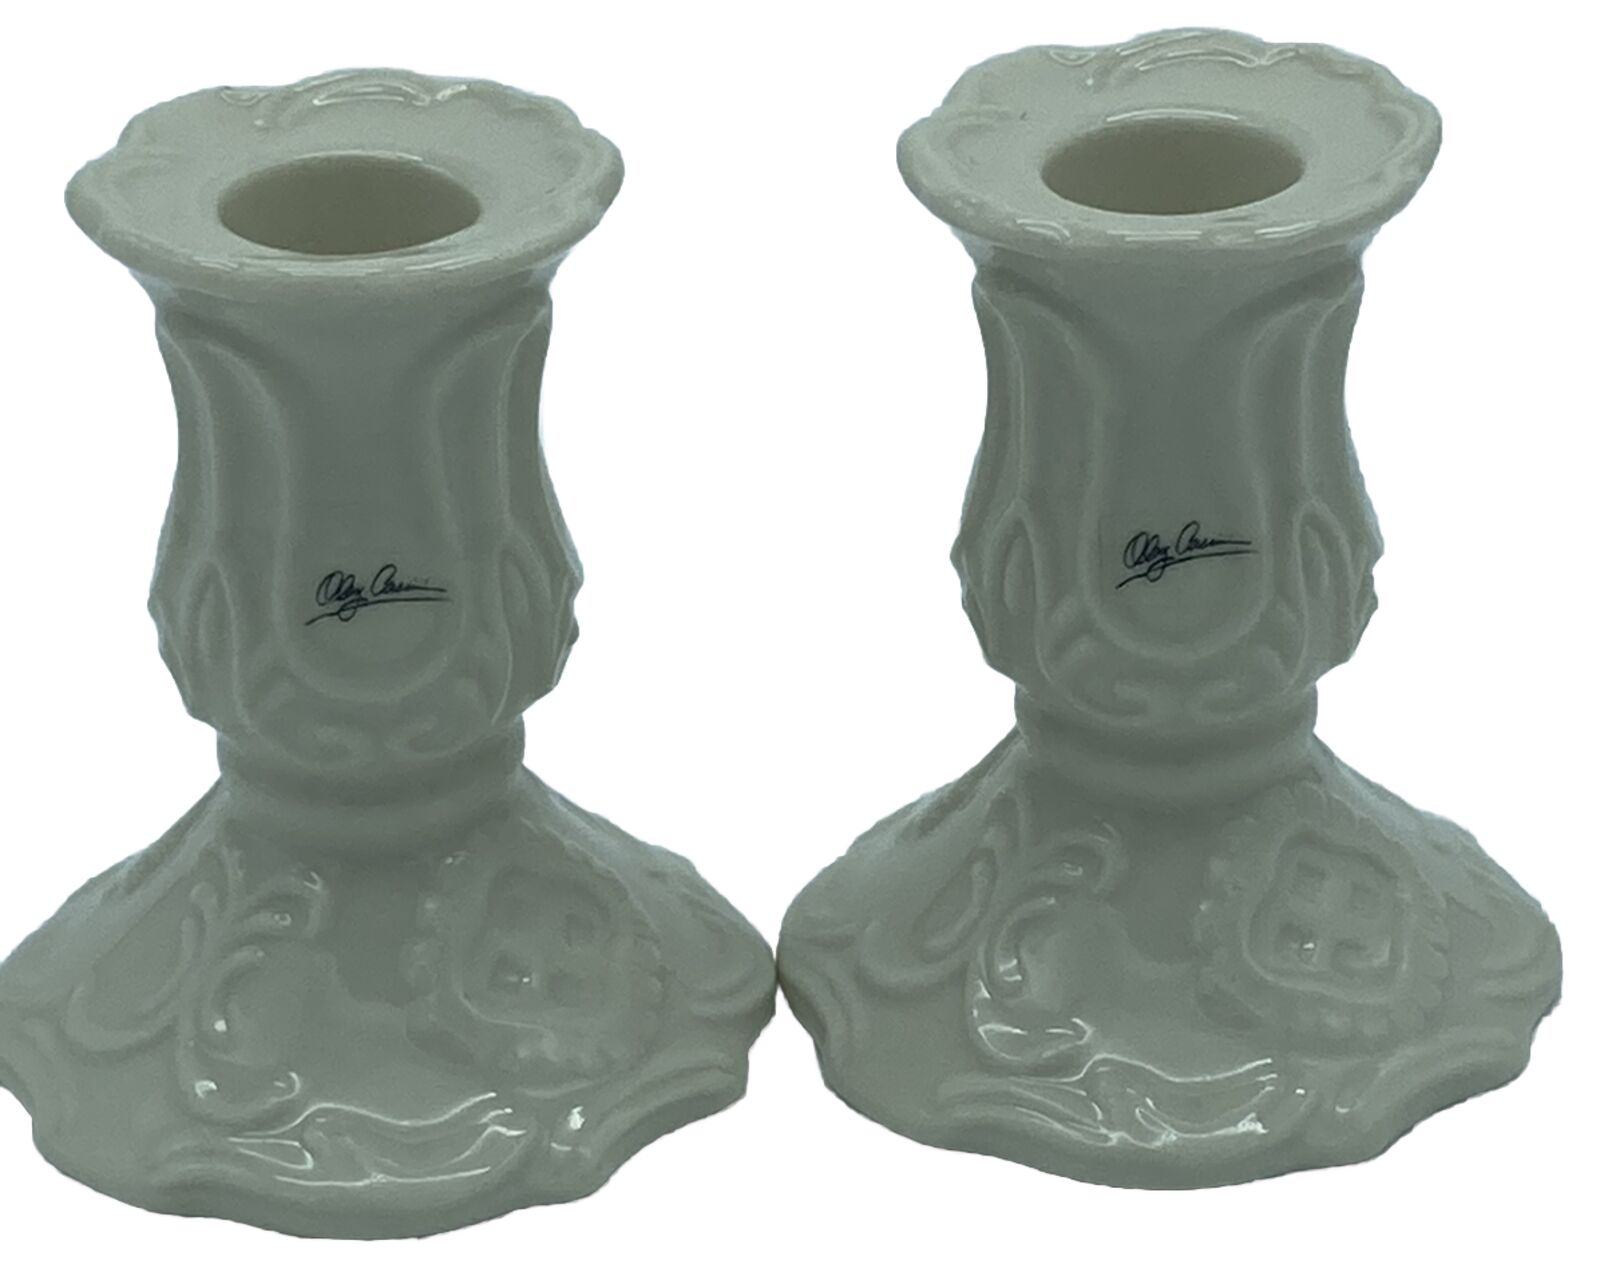 2 Oleg Cassini Ivory Porcelain Candlestick Holders Baroque Style 3.5” H x 2.75”D